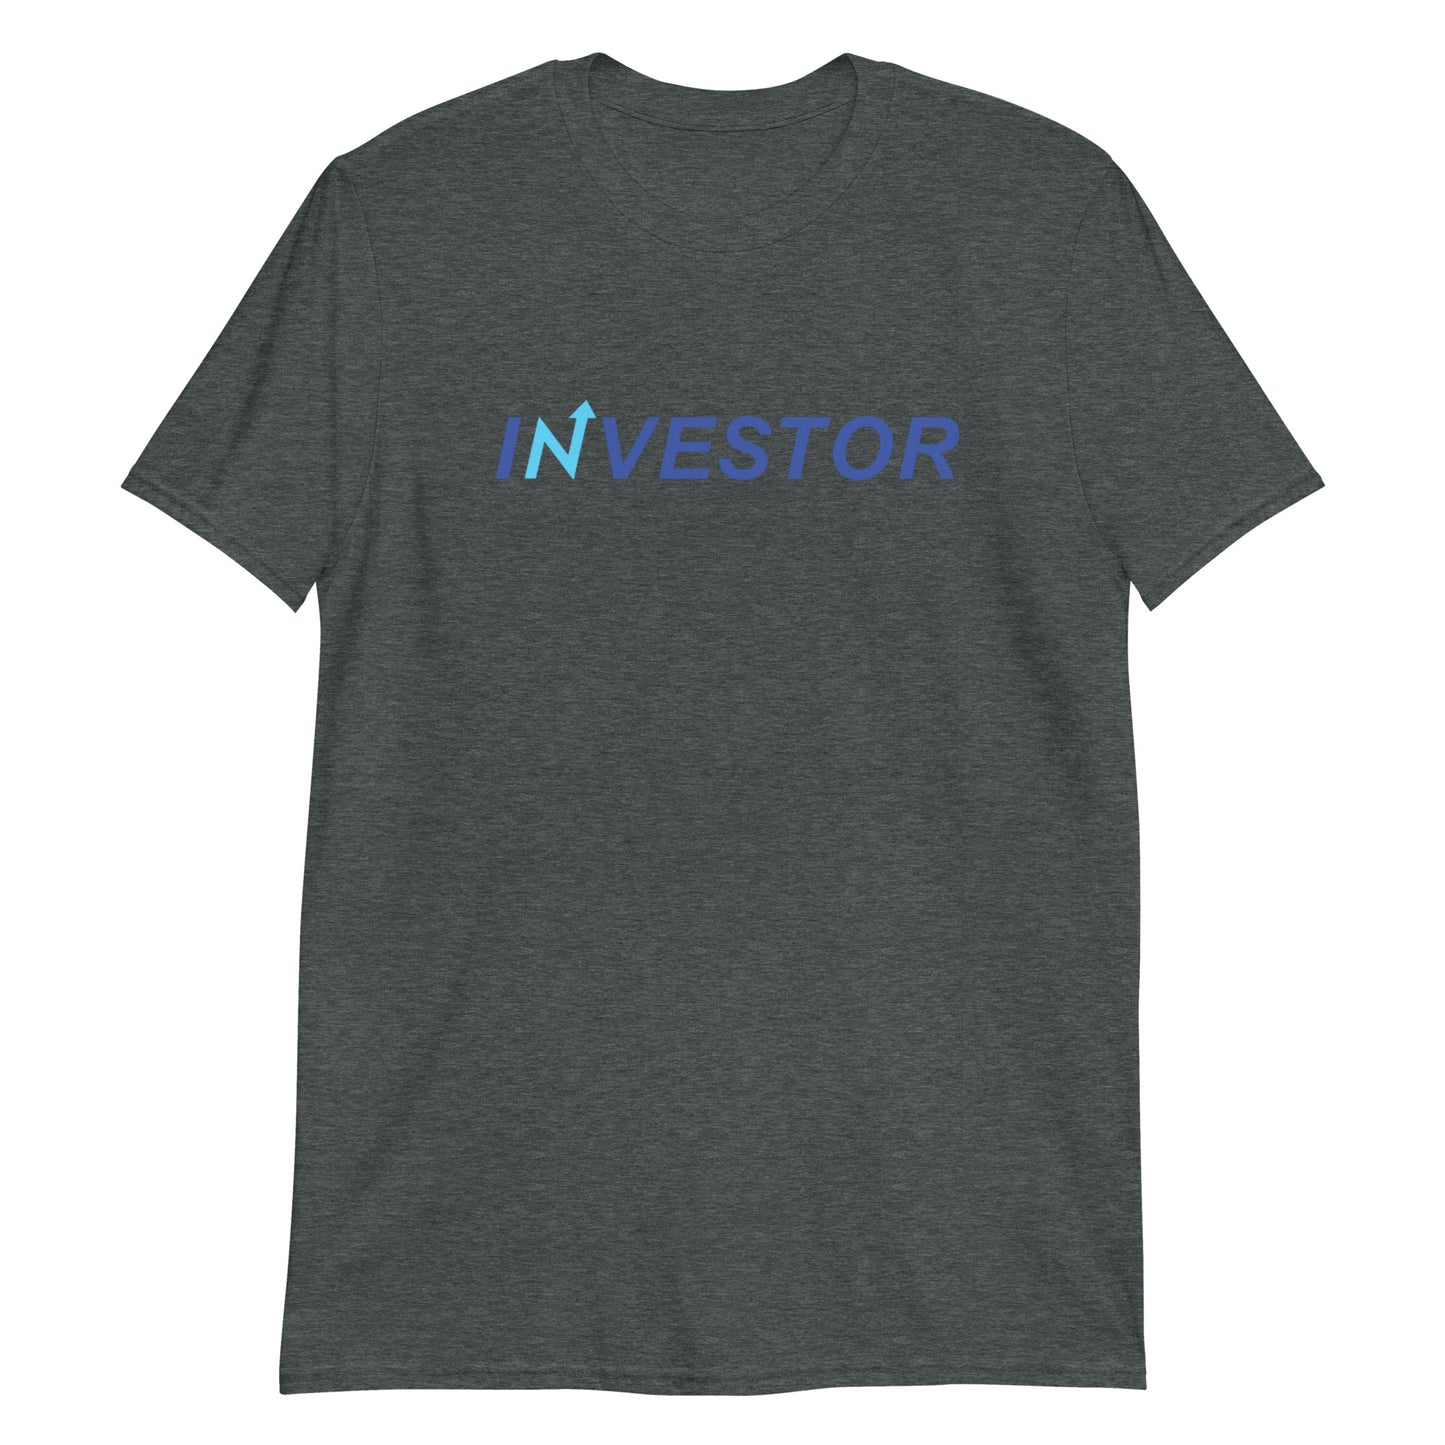 iNvestor Unisex T-Shirt